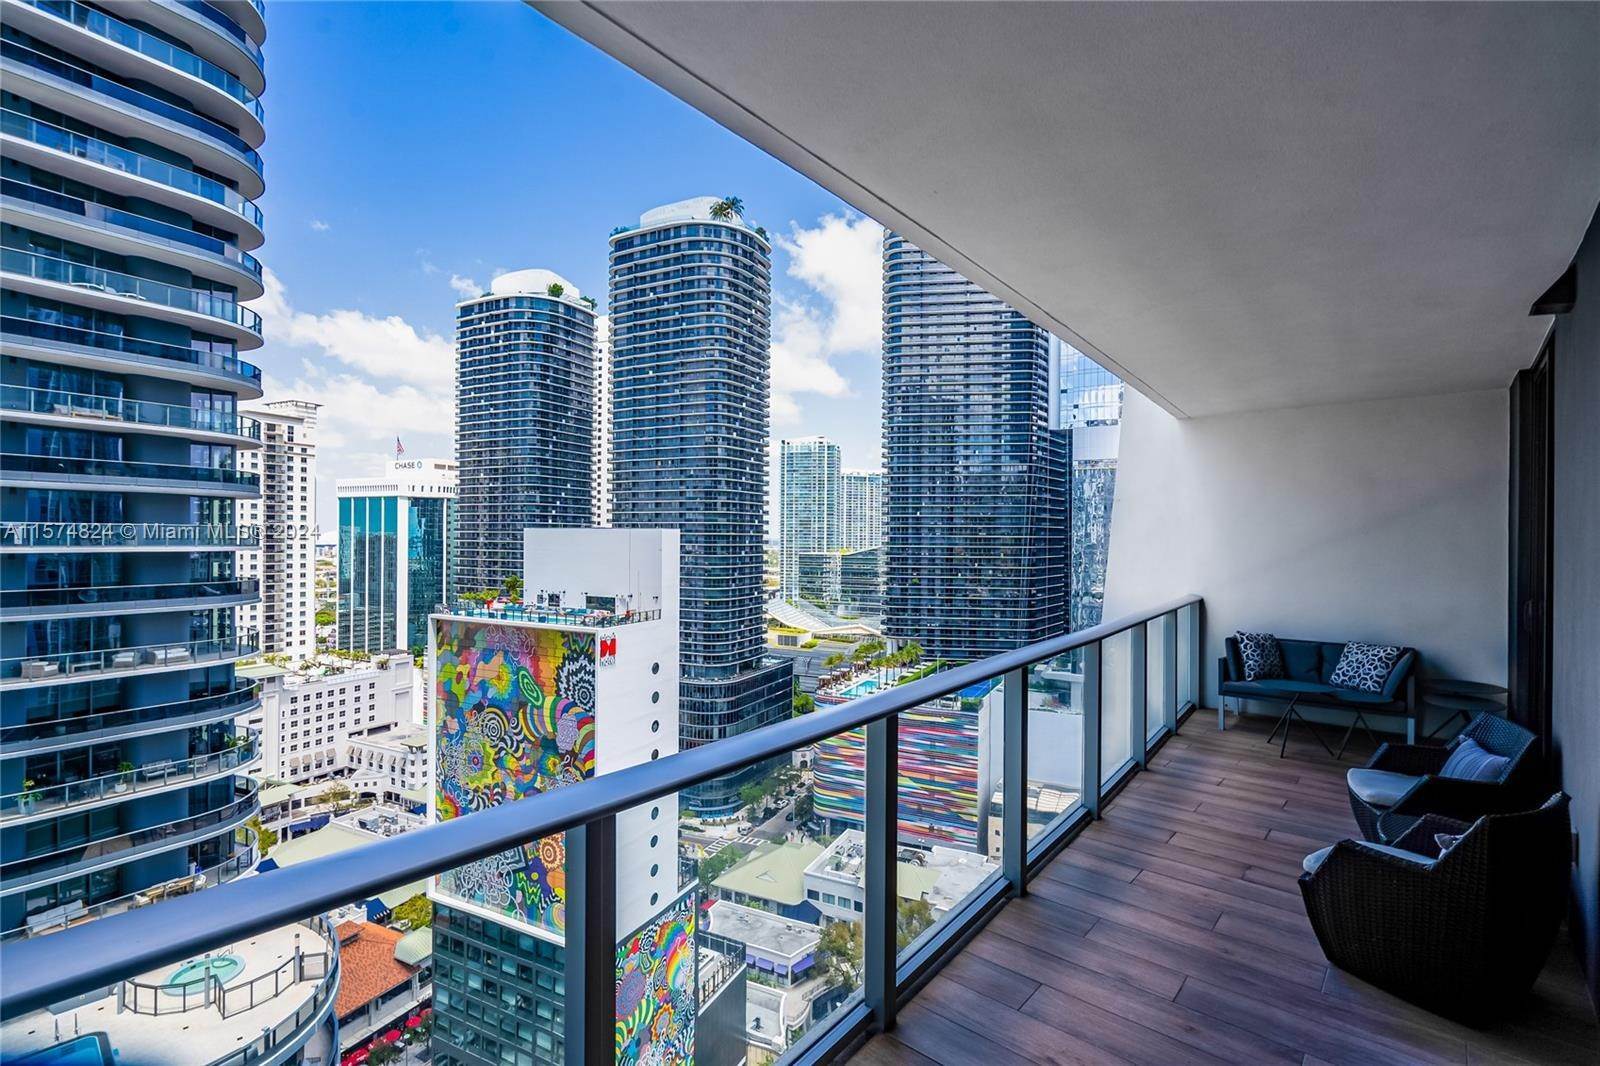 Condominiums at Brickell, Miami, FL 33131